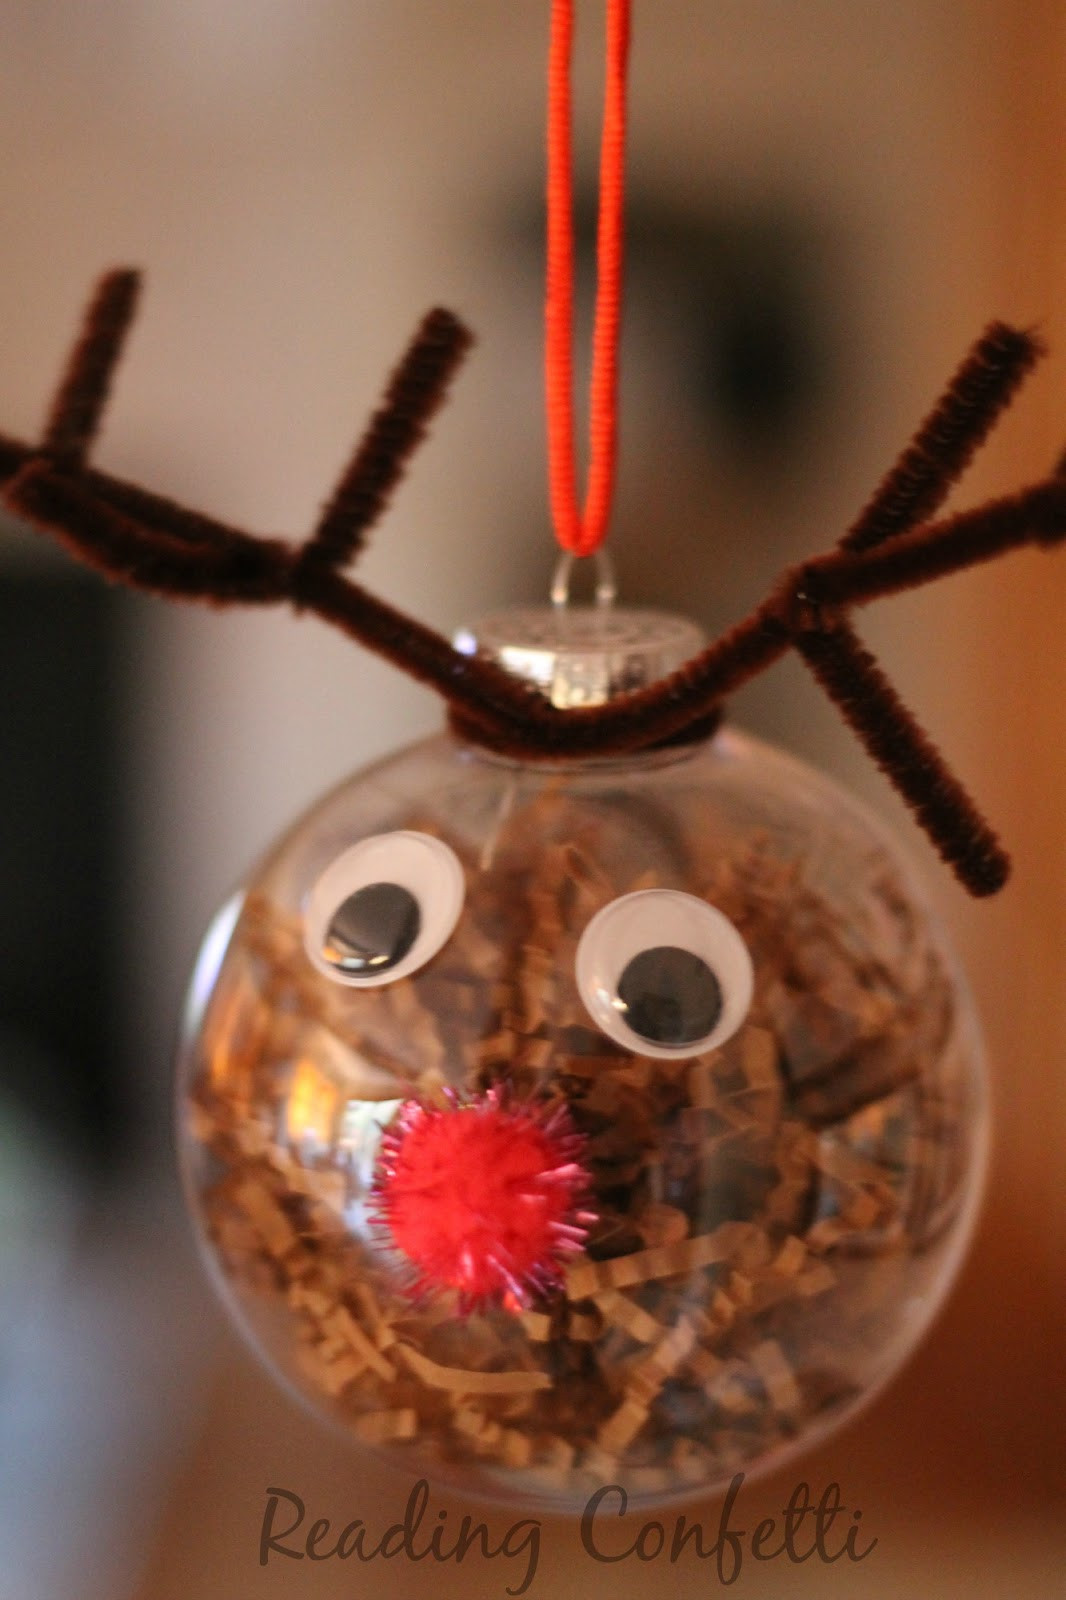 Preschool Christmas Ornament Craft Ideas
 Reindeer Ornament Reading Confetti